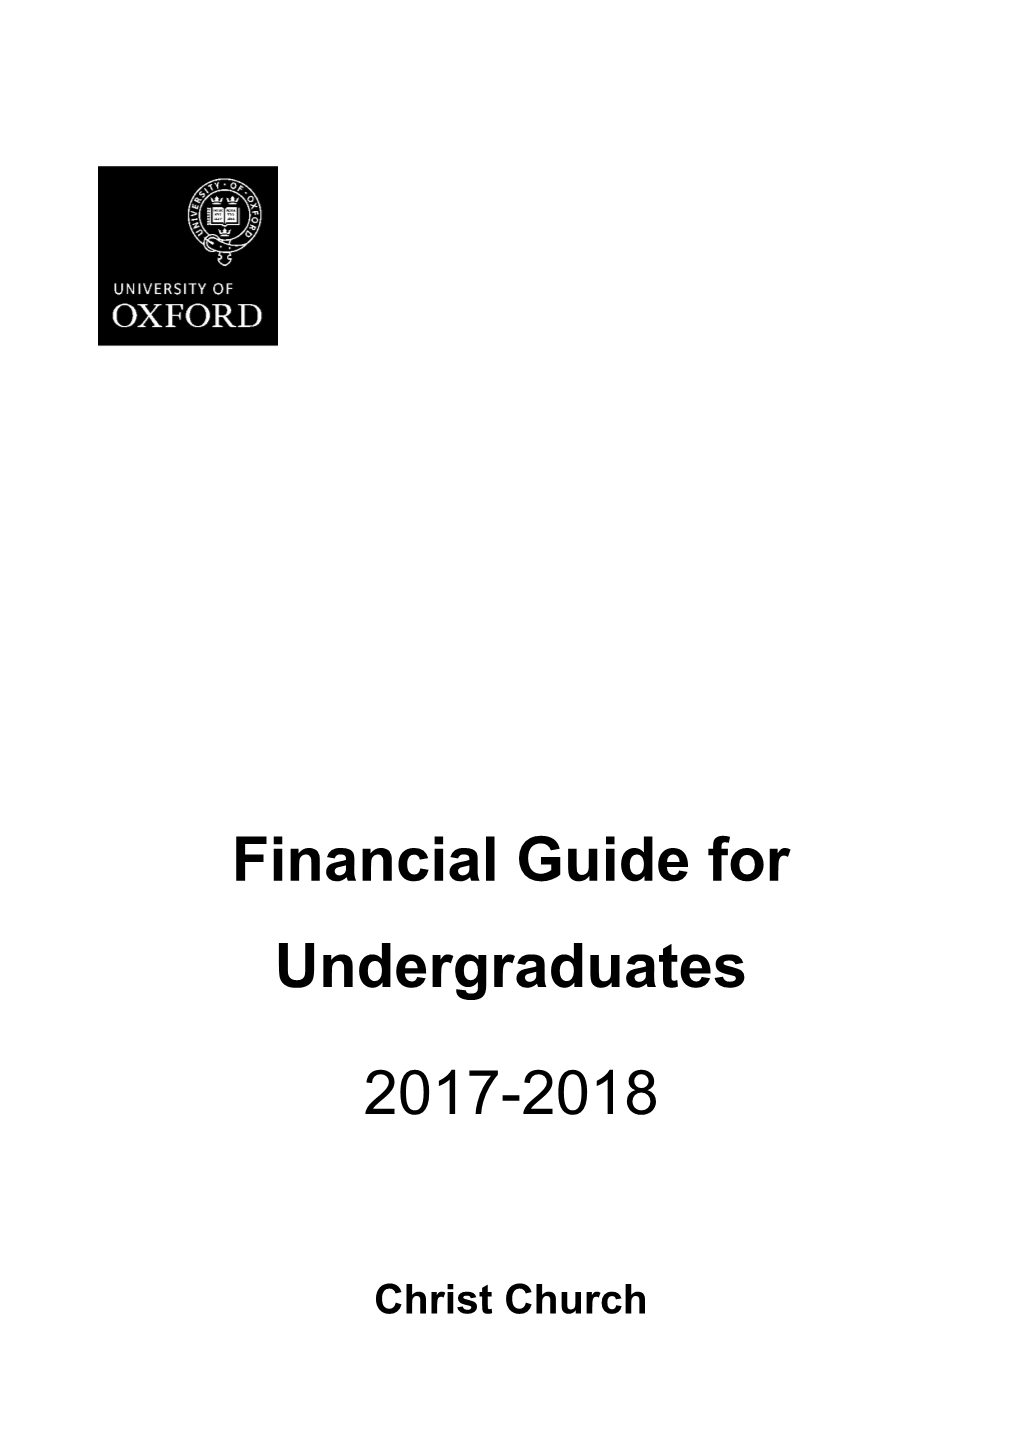 Financial Guide for Undergraduates